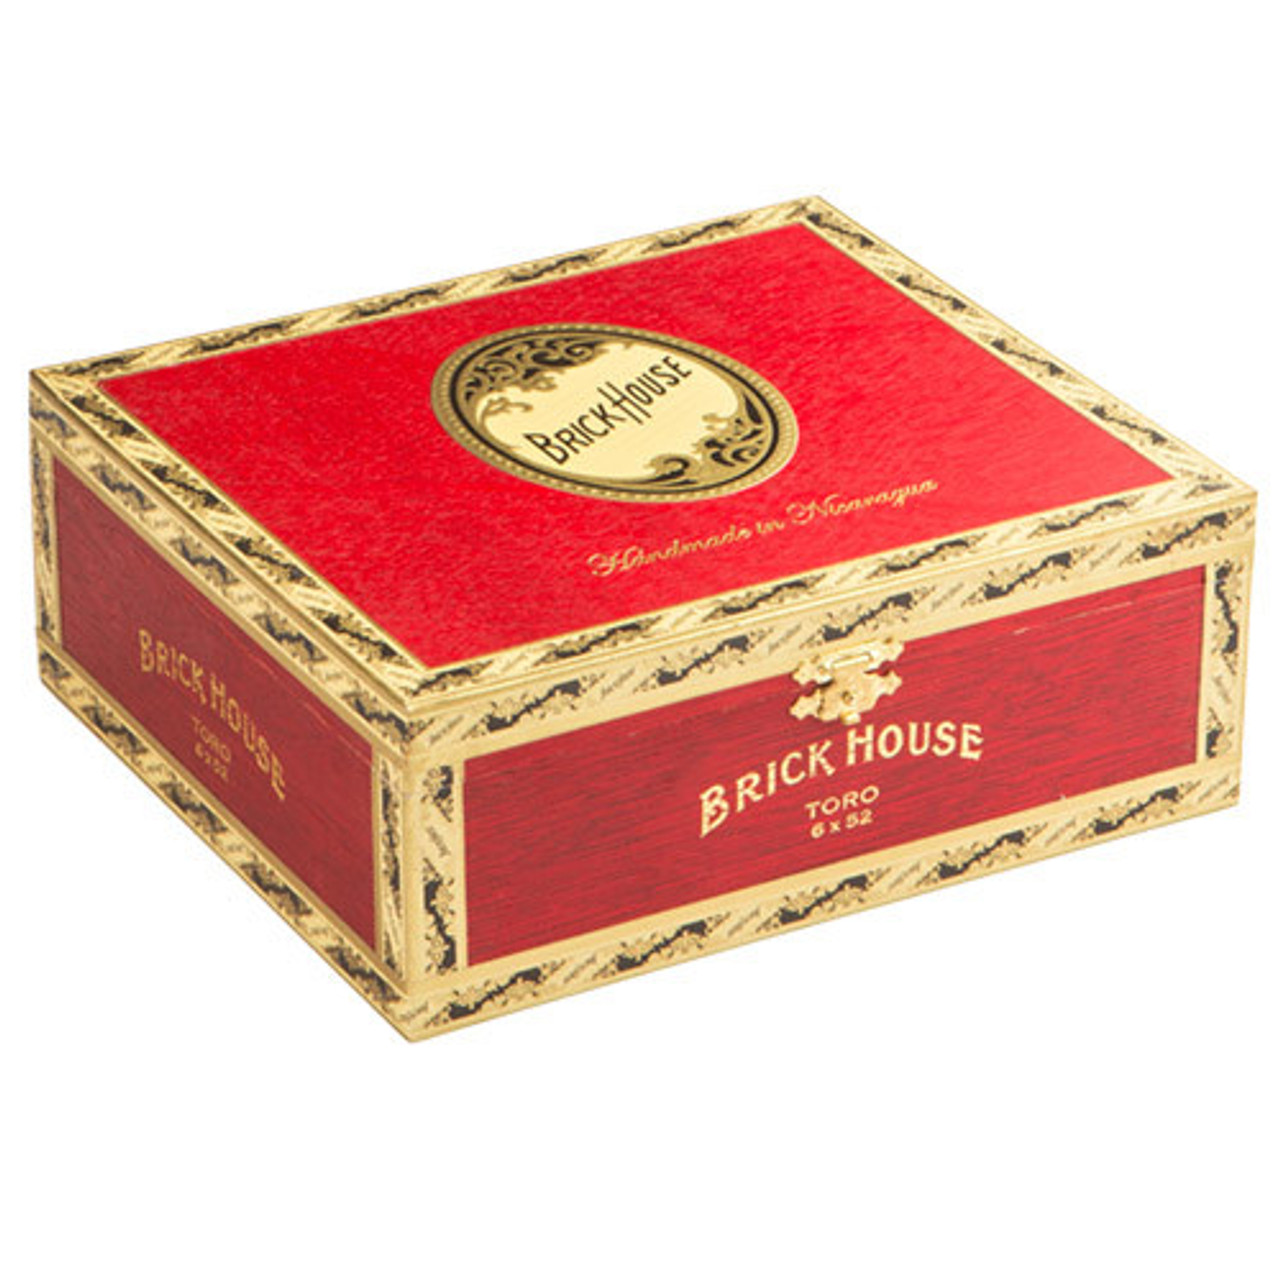 Brick House Corona Larga Cigars - 6.25 x 46 (Box of 25) *Box